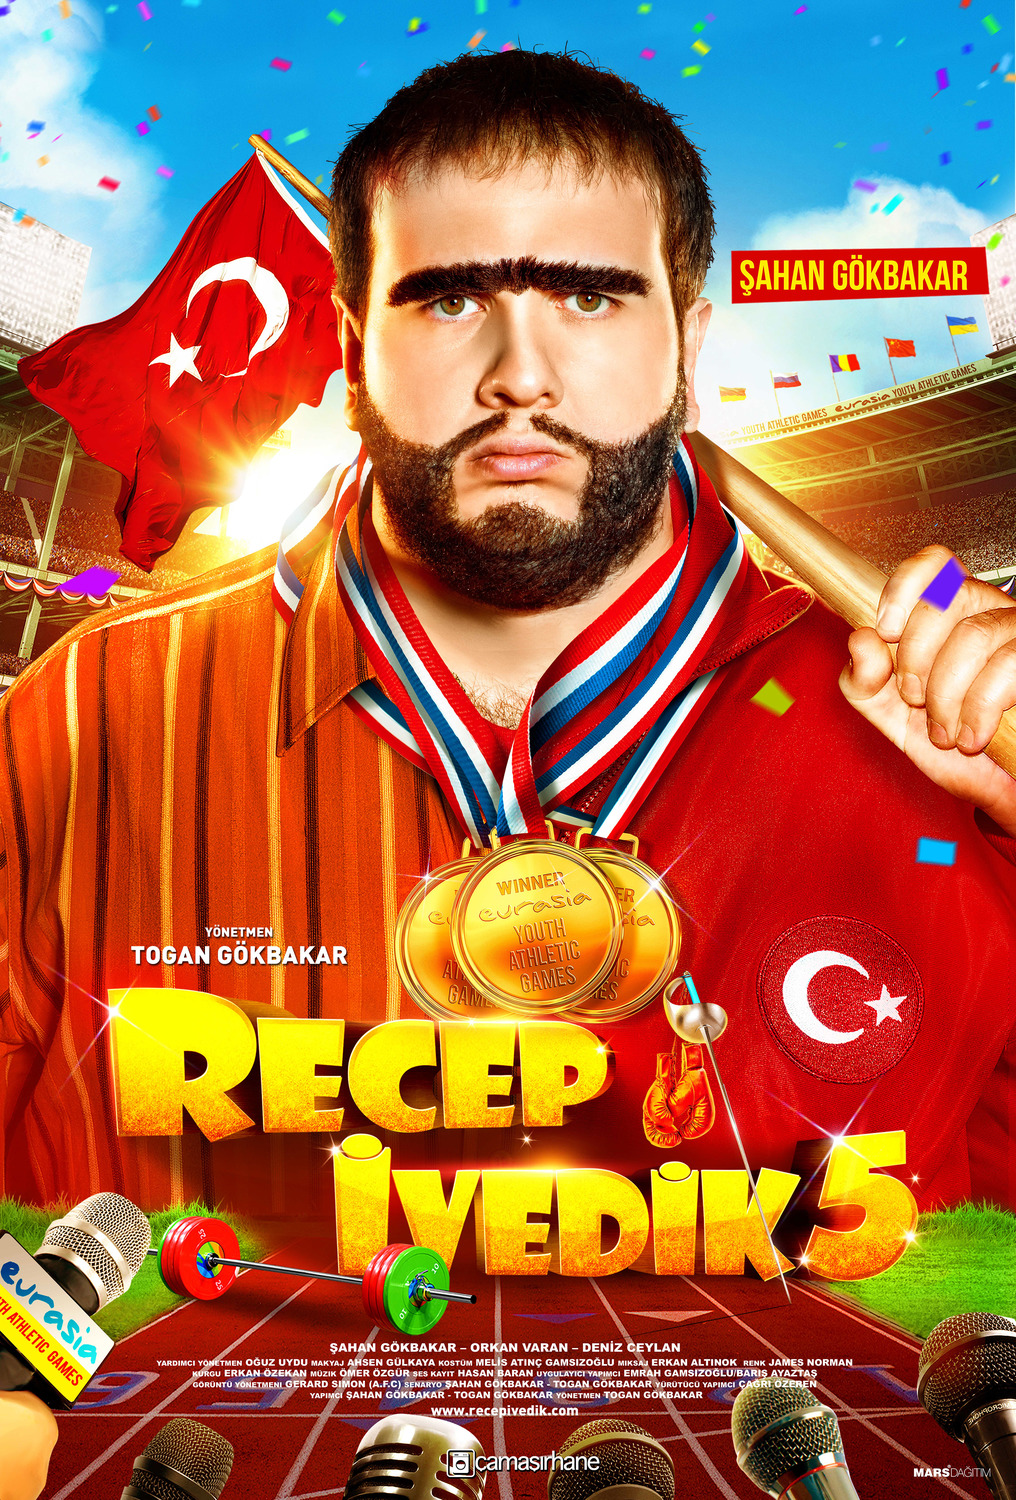 Extra Large Movie Poster Image for Recep Ivedik 5 